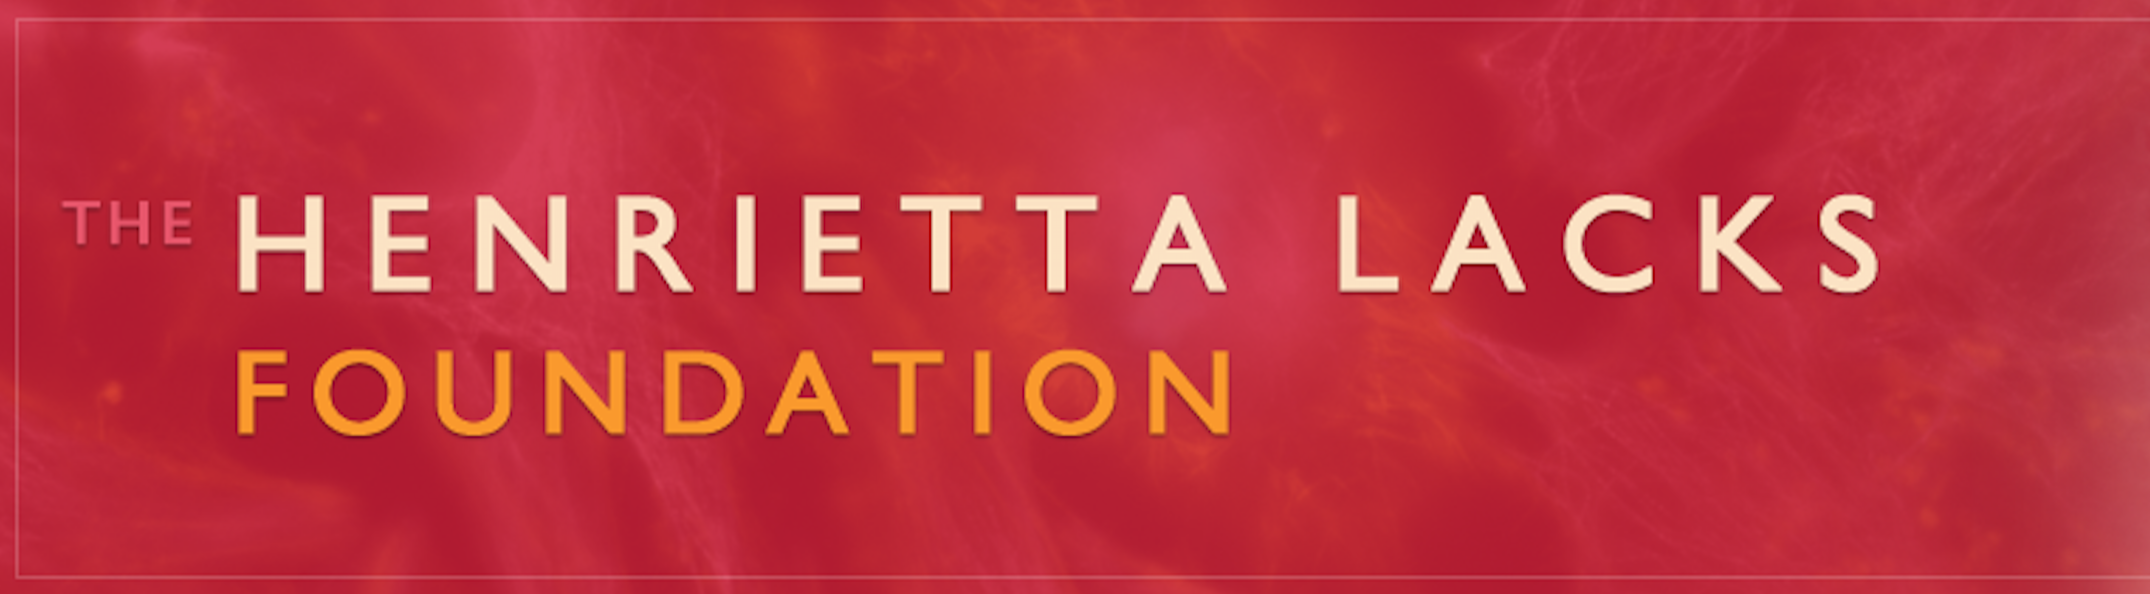 The Henrietta Lacks Foundation